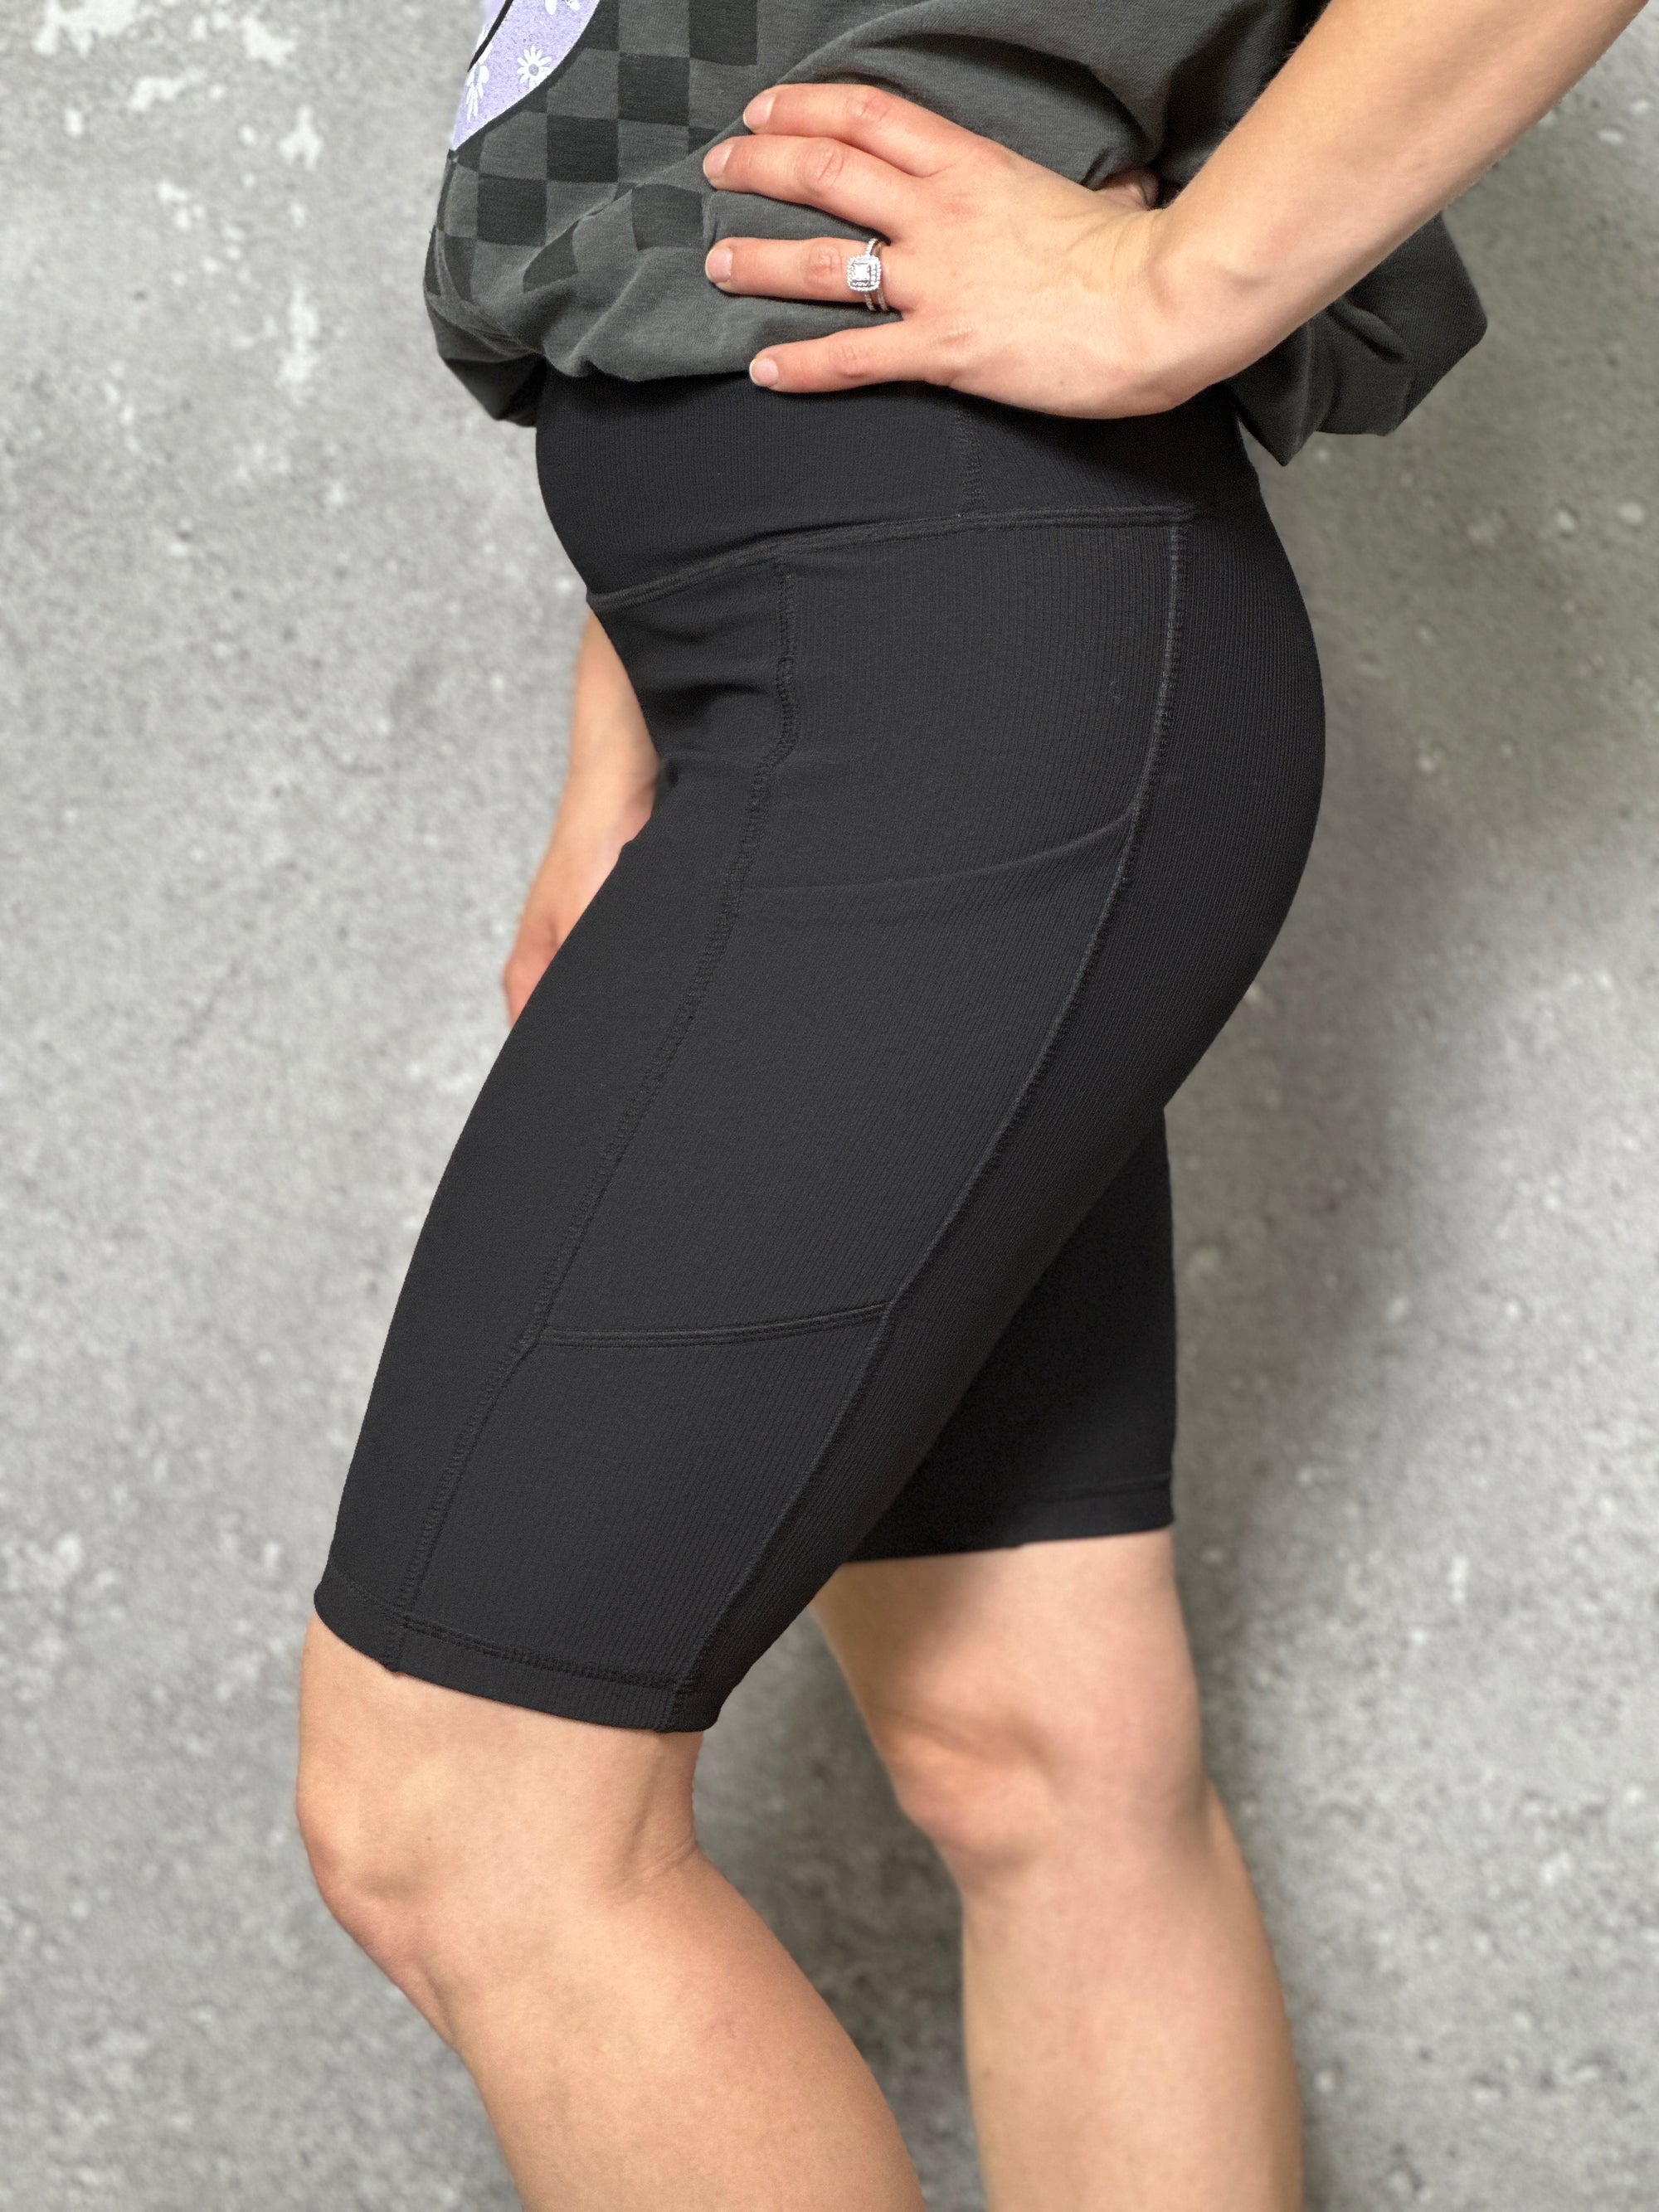 Black Ribbed Biker Shorts with Pockets  - Small - 3X